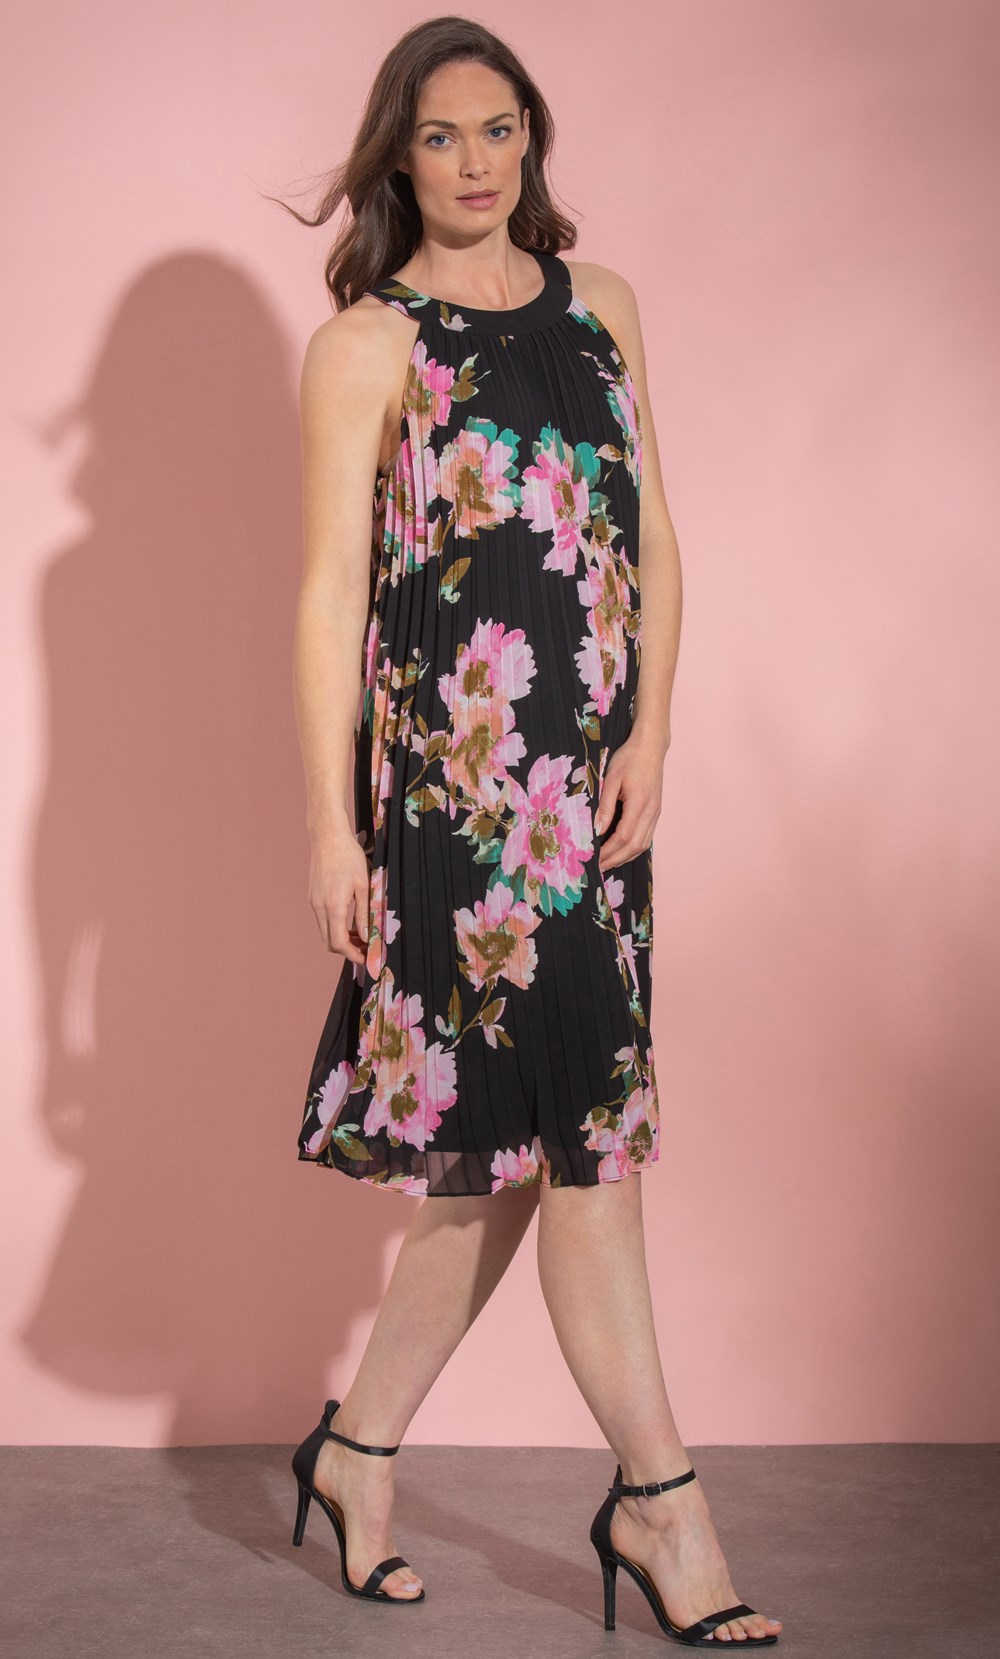 Klass Pleated Floral Print Halter Neck Dress Black/Pink Women’s